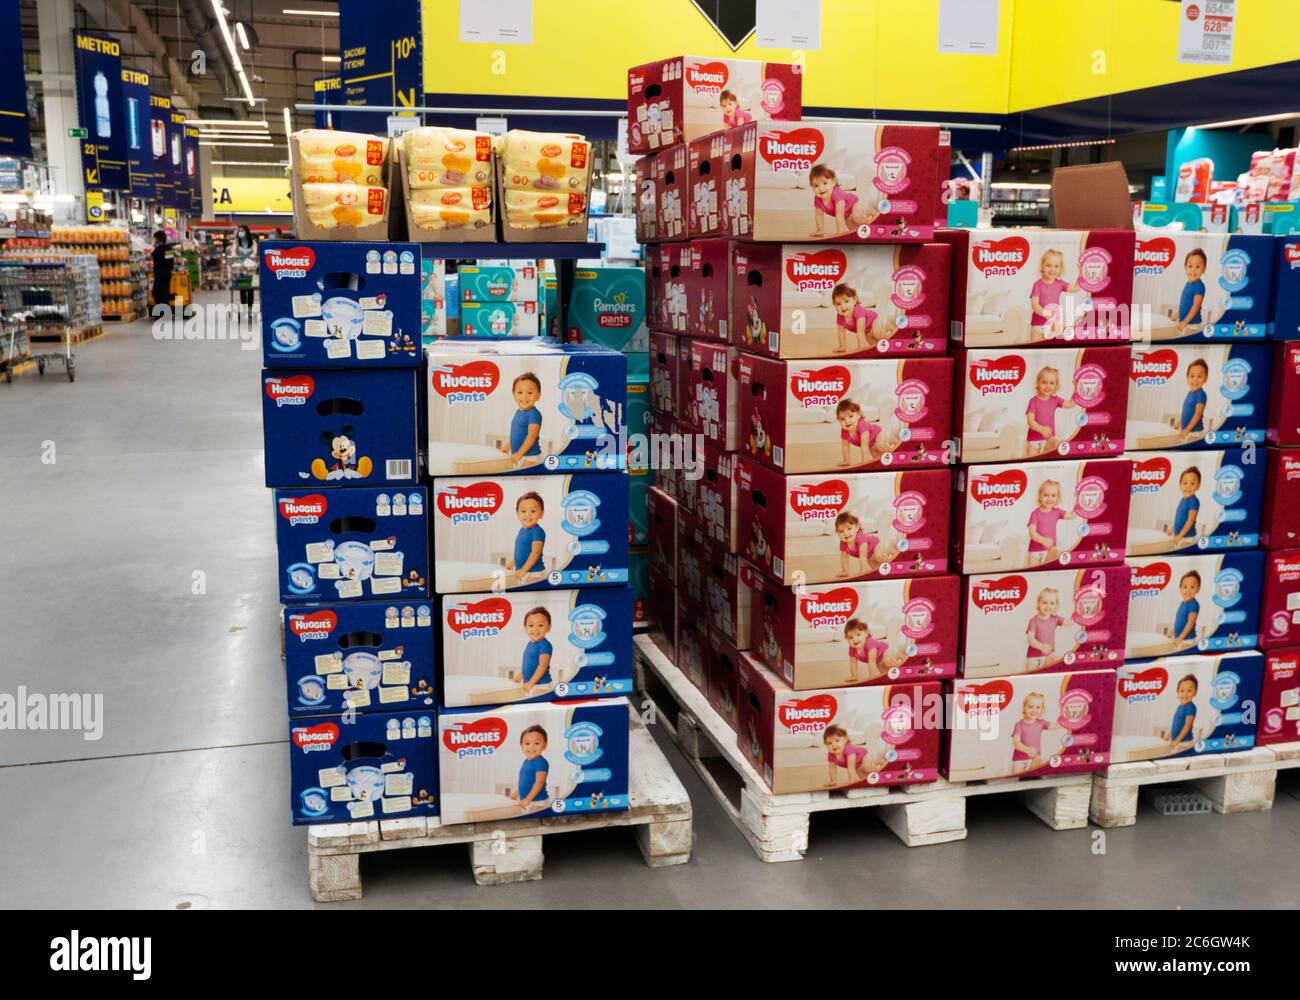 Huggies Diapers is seen on store shelf – Stock Editorial Photo ©  igorgolovniov #303404424